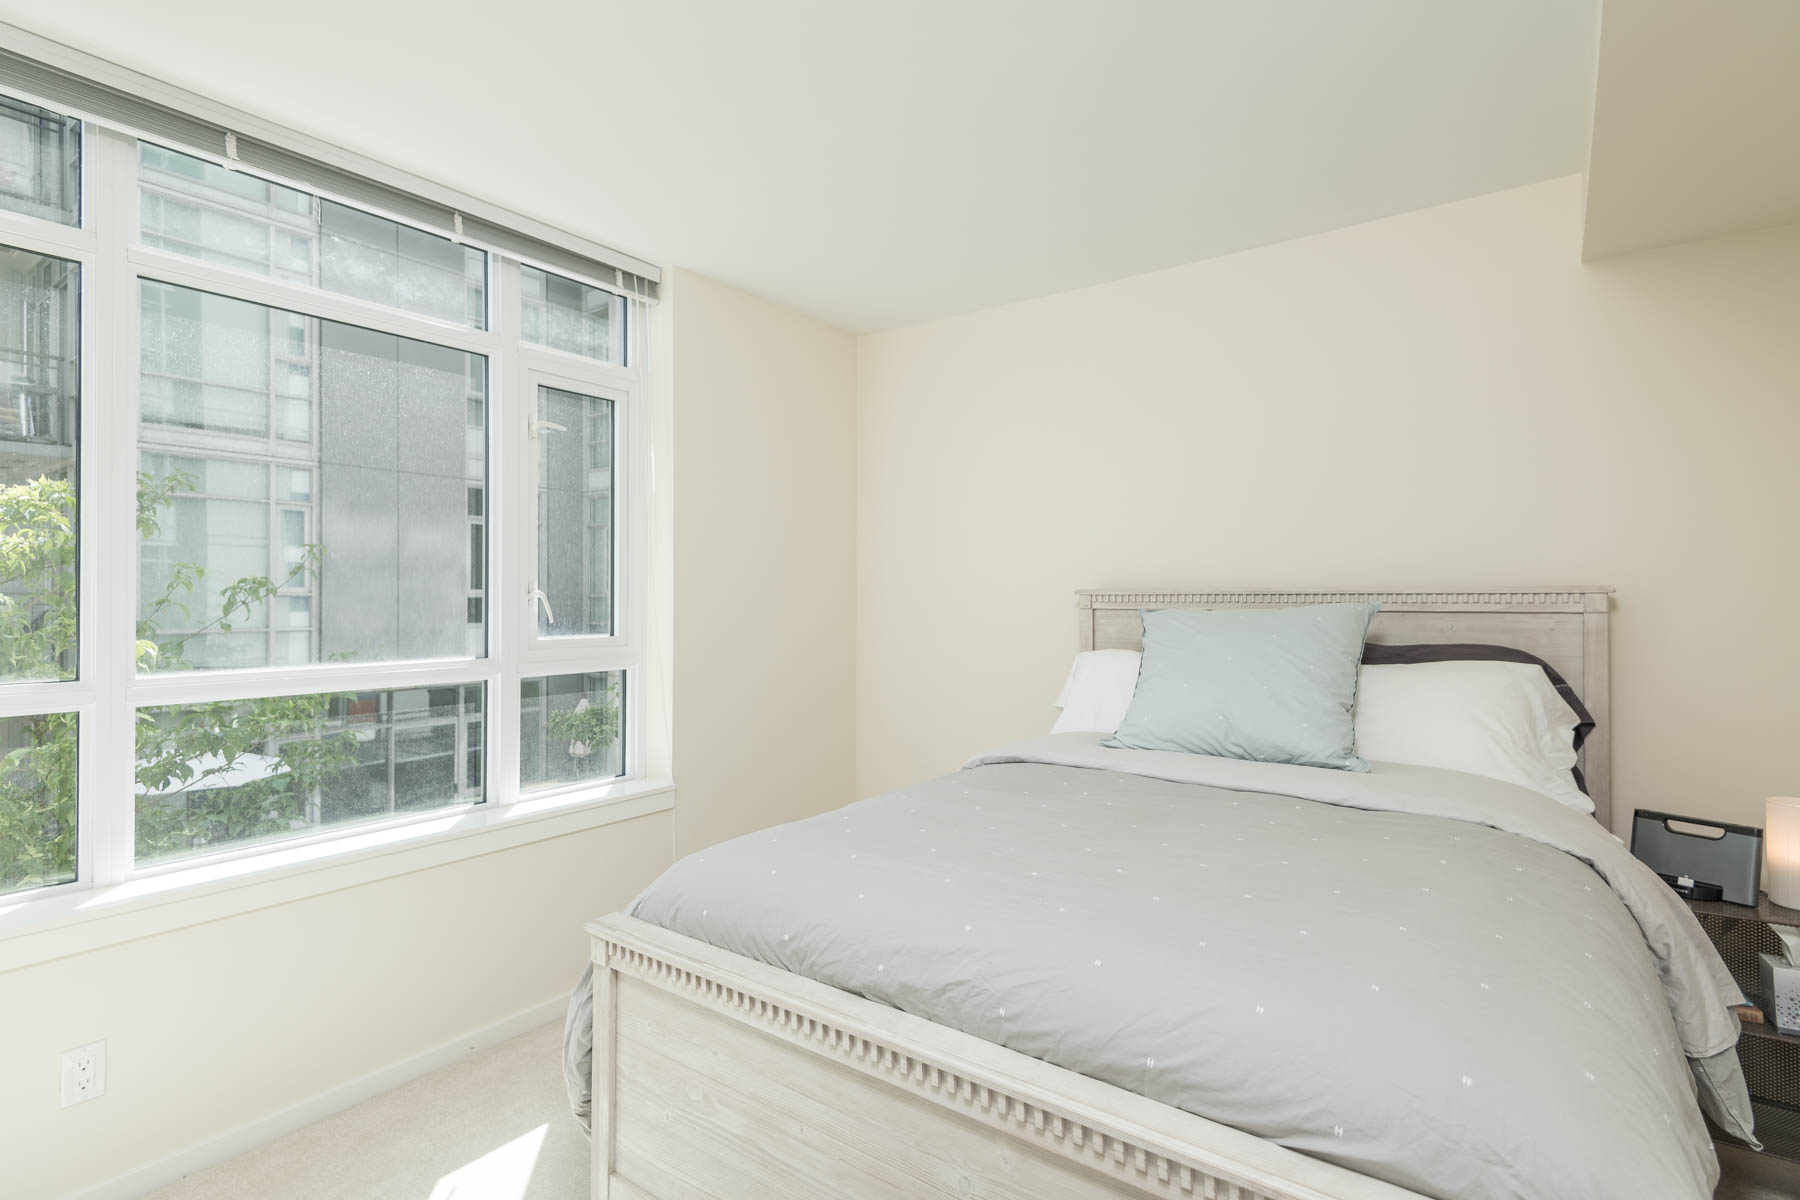 Furnished bedroom inside Vancouver rental condo.